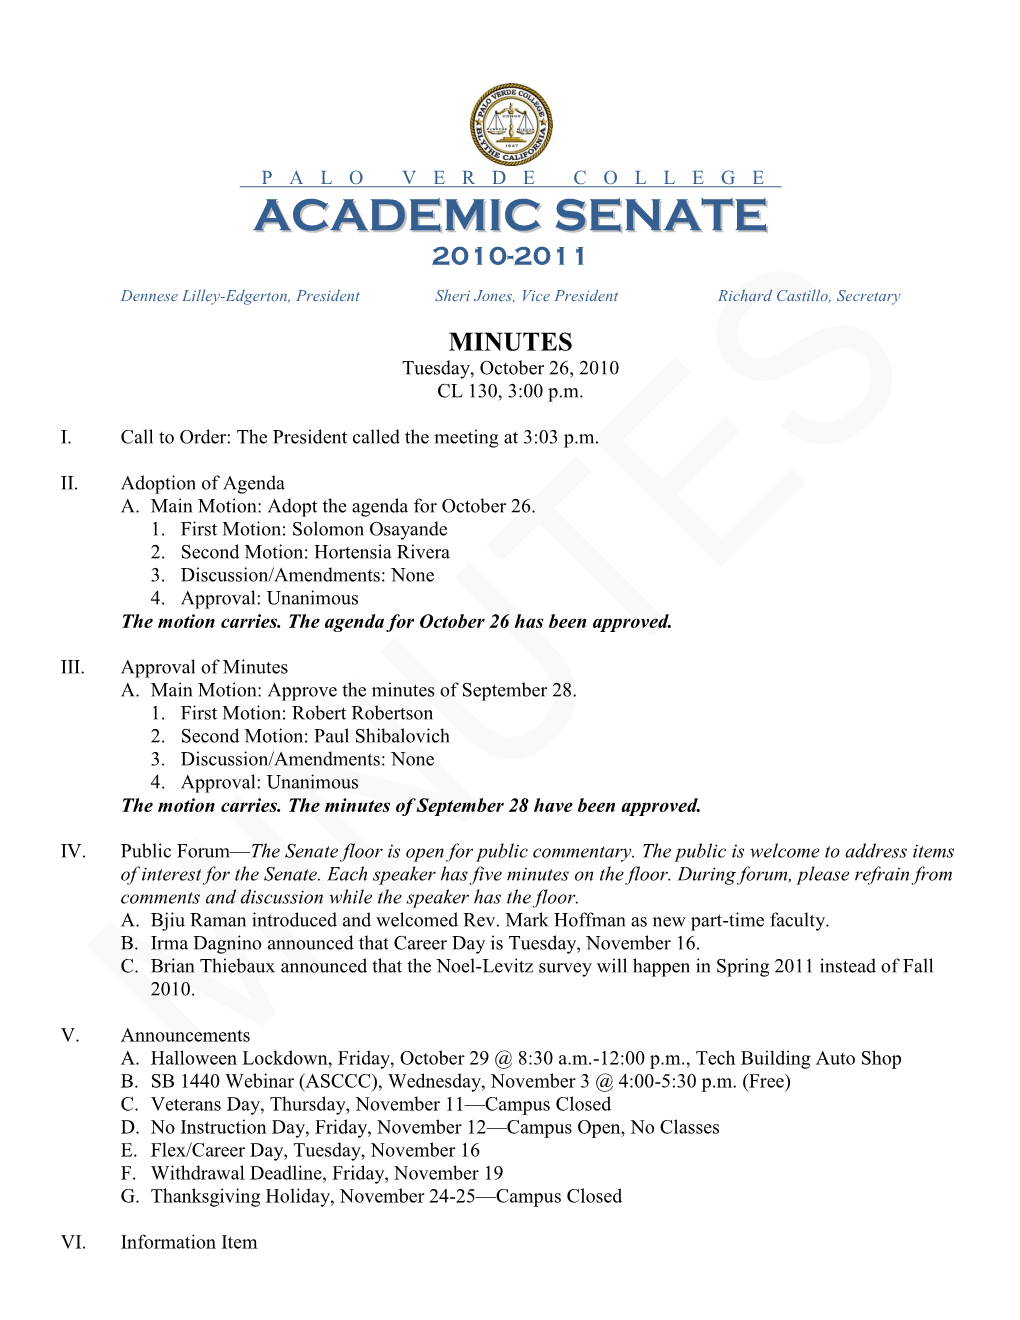 Academic Senate with Original Language— Reinstate Academic Senate for California Community Colleges Into the Resolution